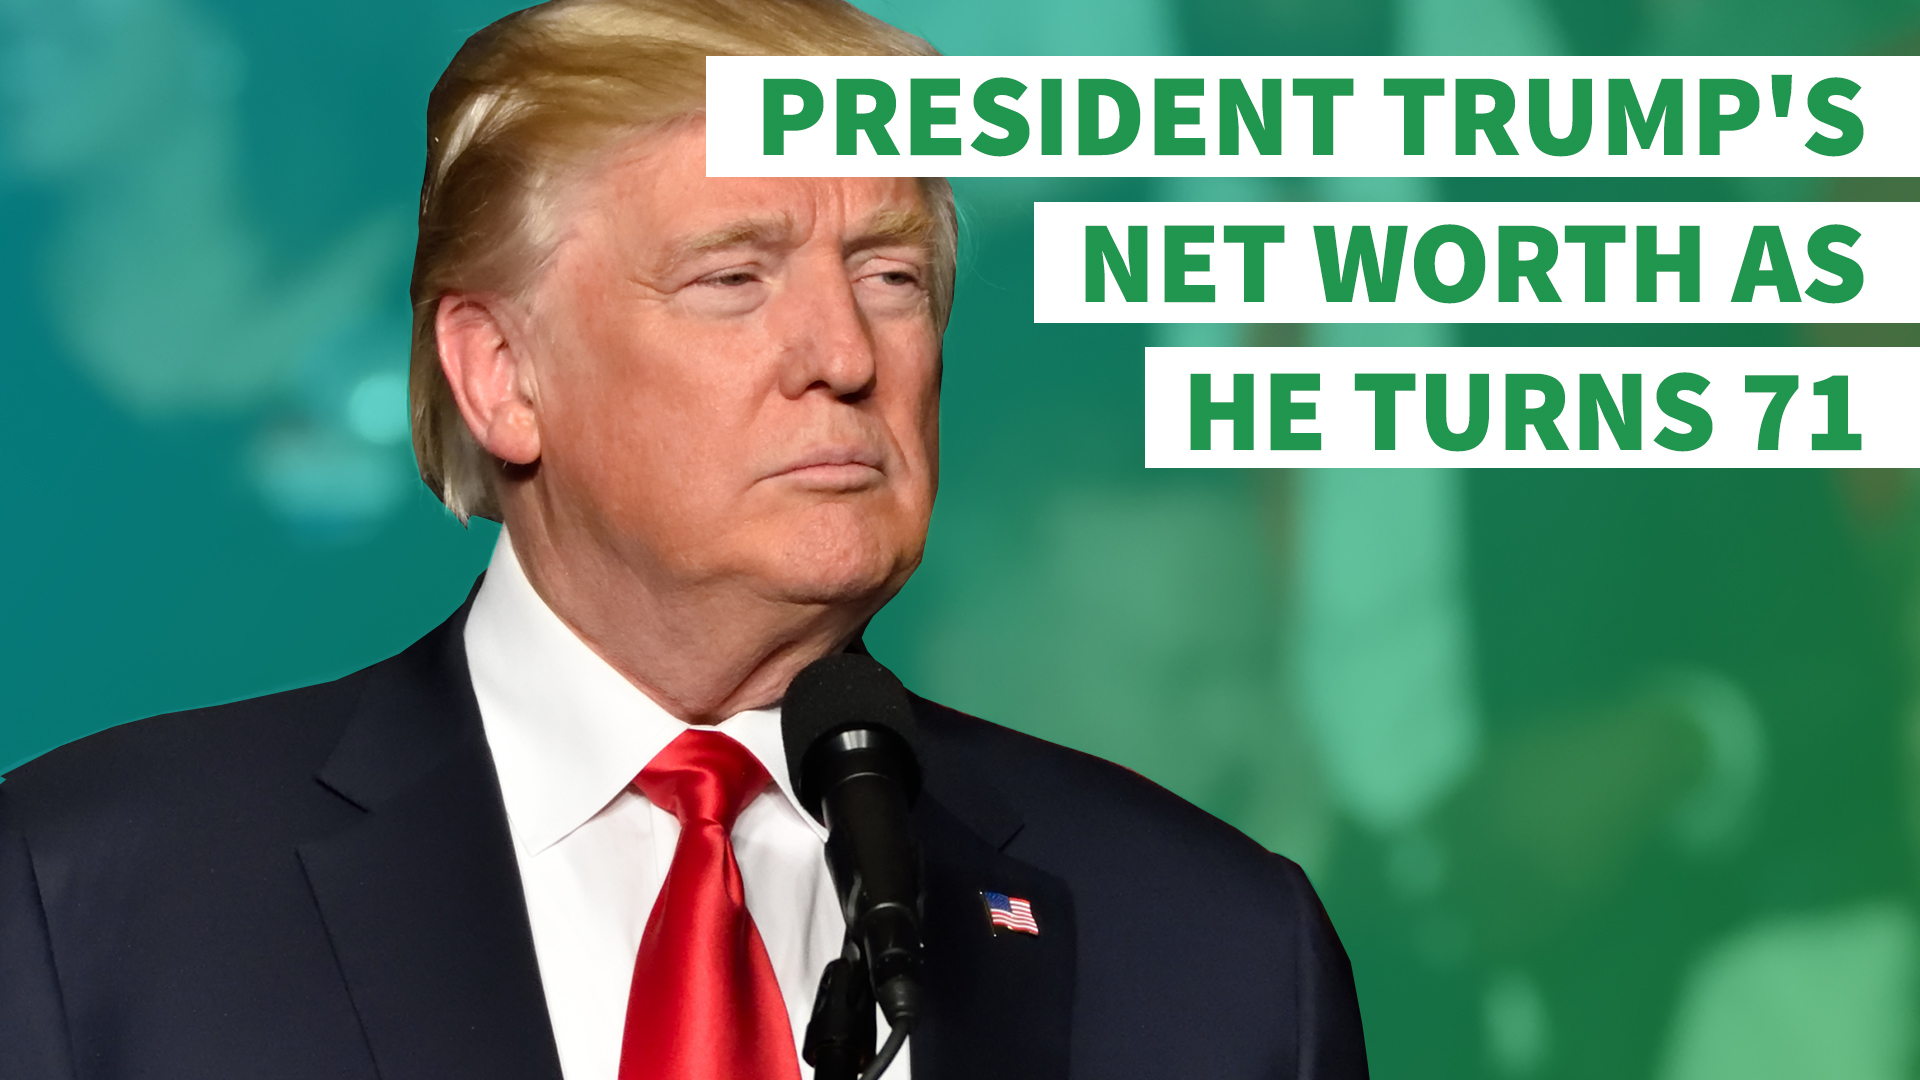 President Donald Trump Net Worth in 2019